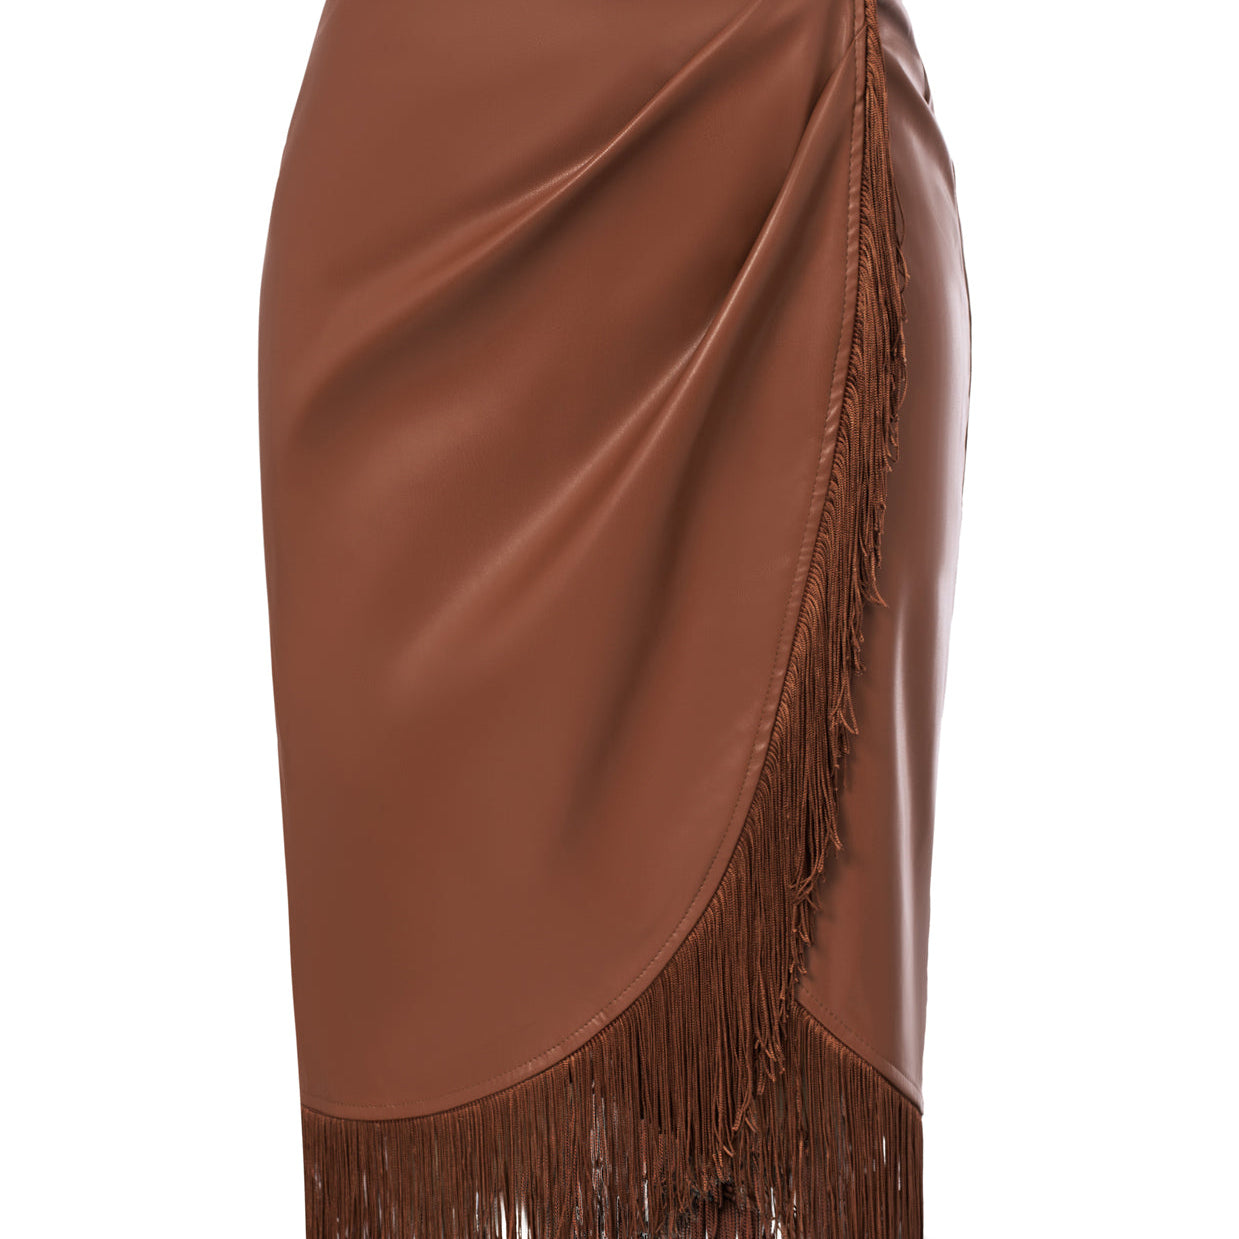 Fringe Bodycon Leather Skirt with Slit Knee Length Pencil Skirt